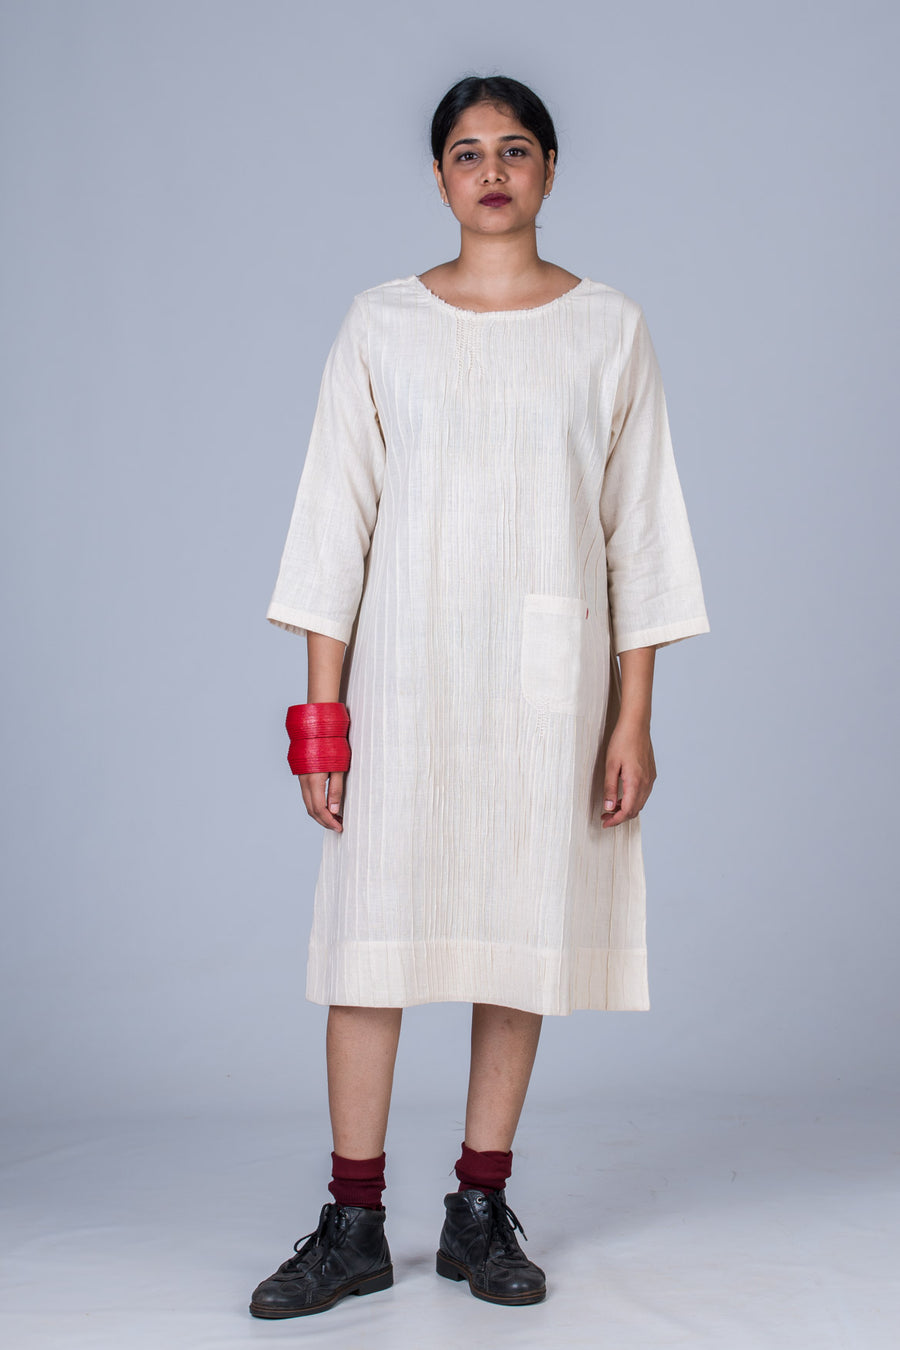 Off  White Desi Cotton Pintuck Dress - PARINA - Upasana Design Studio